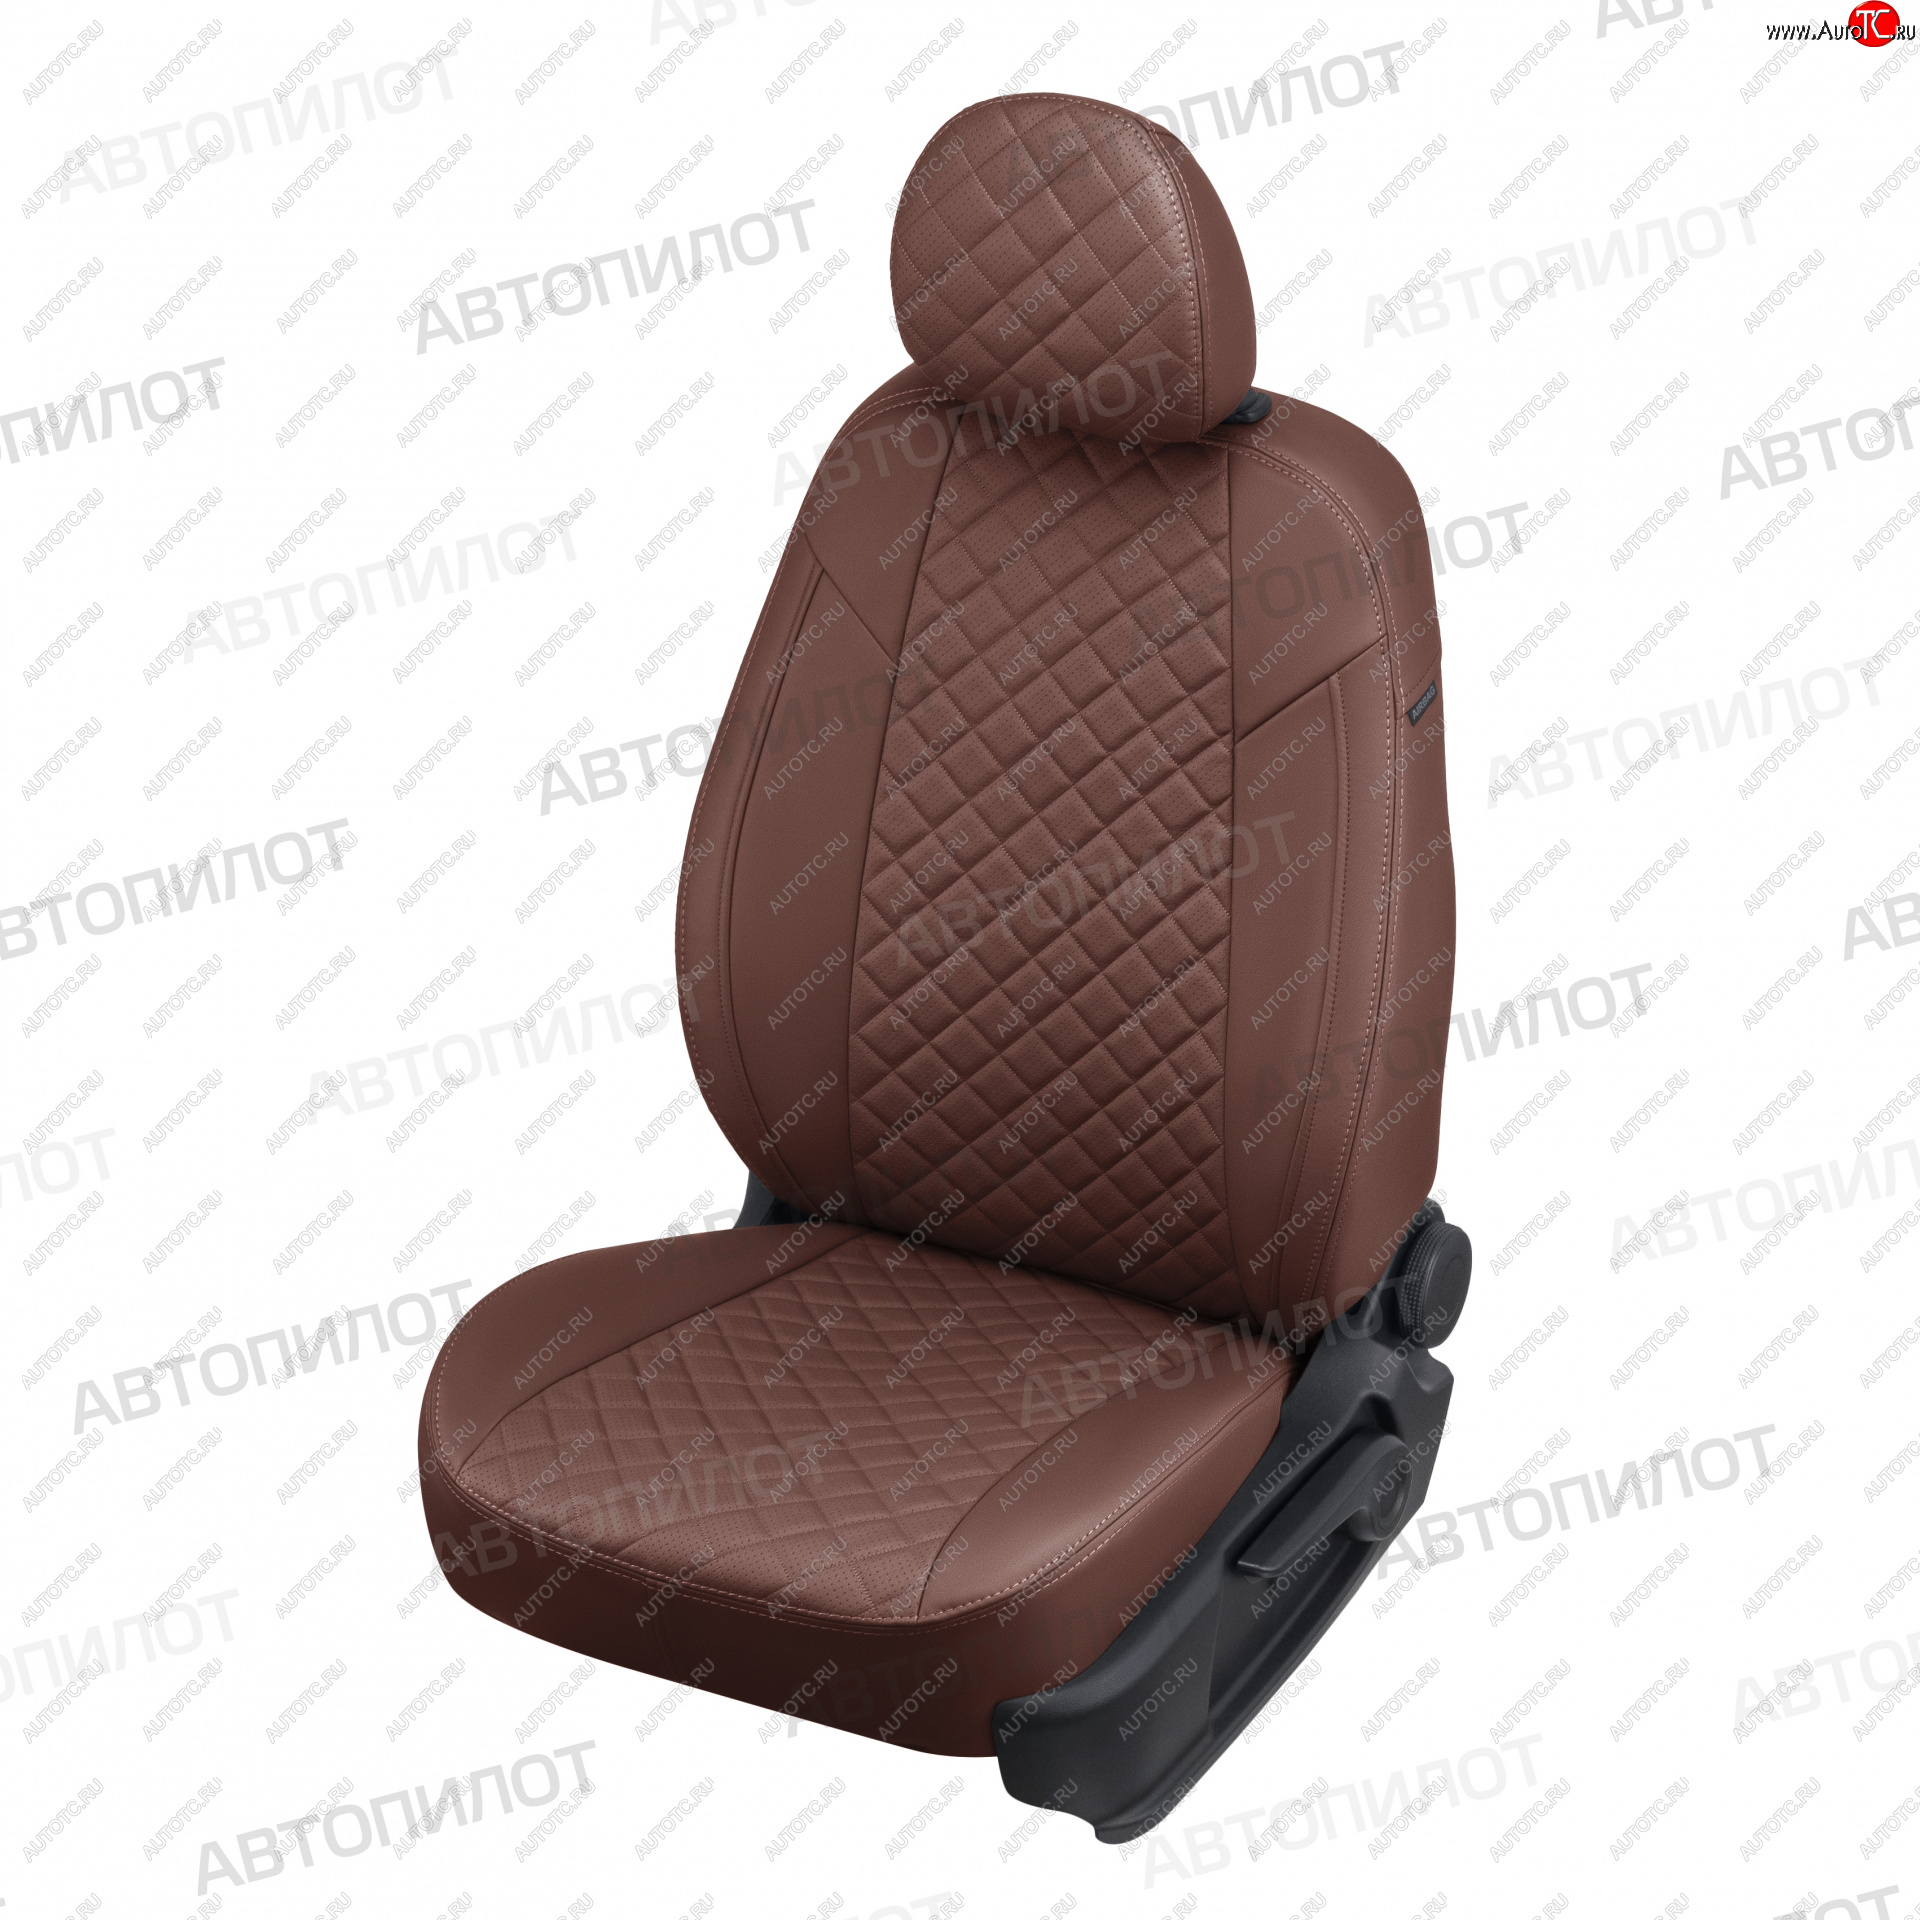 7 799 р. Чехлы сидений (экокожа) Автопилот Ромб  KIA Ceed  2 JD (2012-2018) (темно-коричневый)